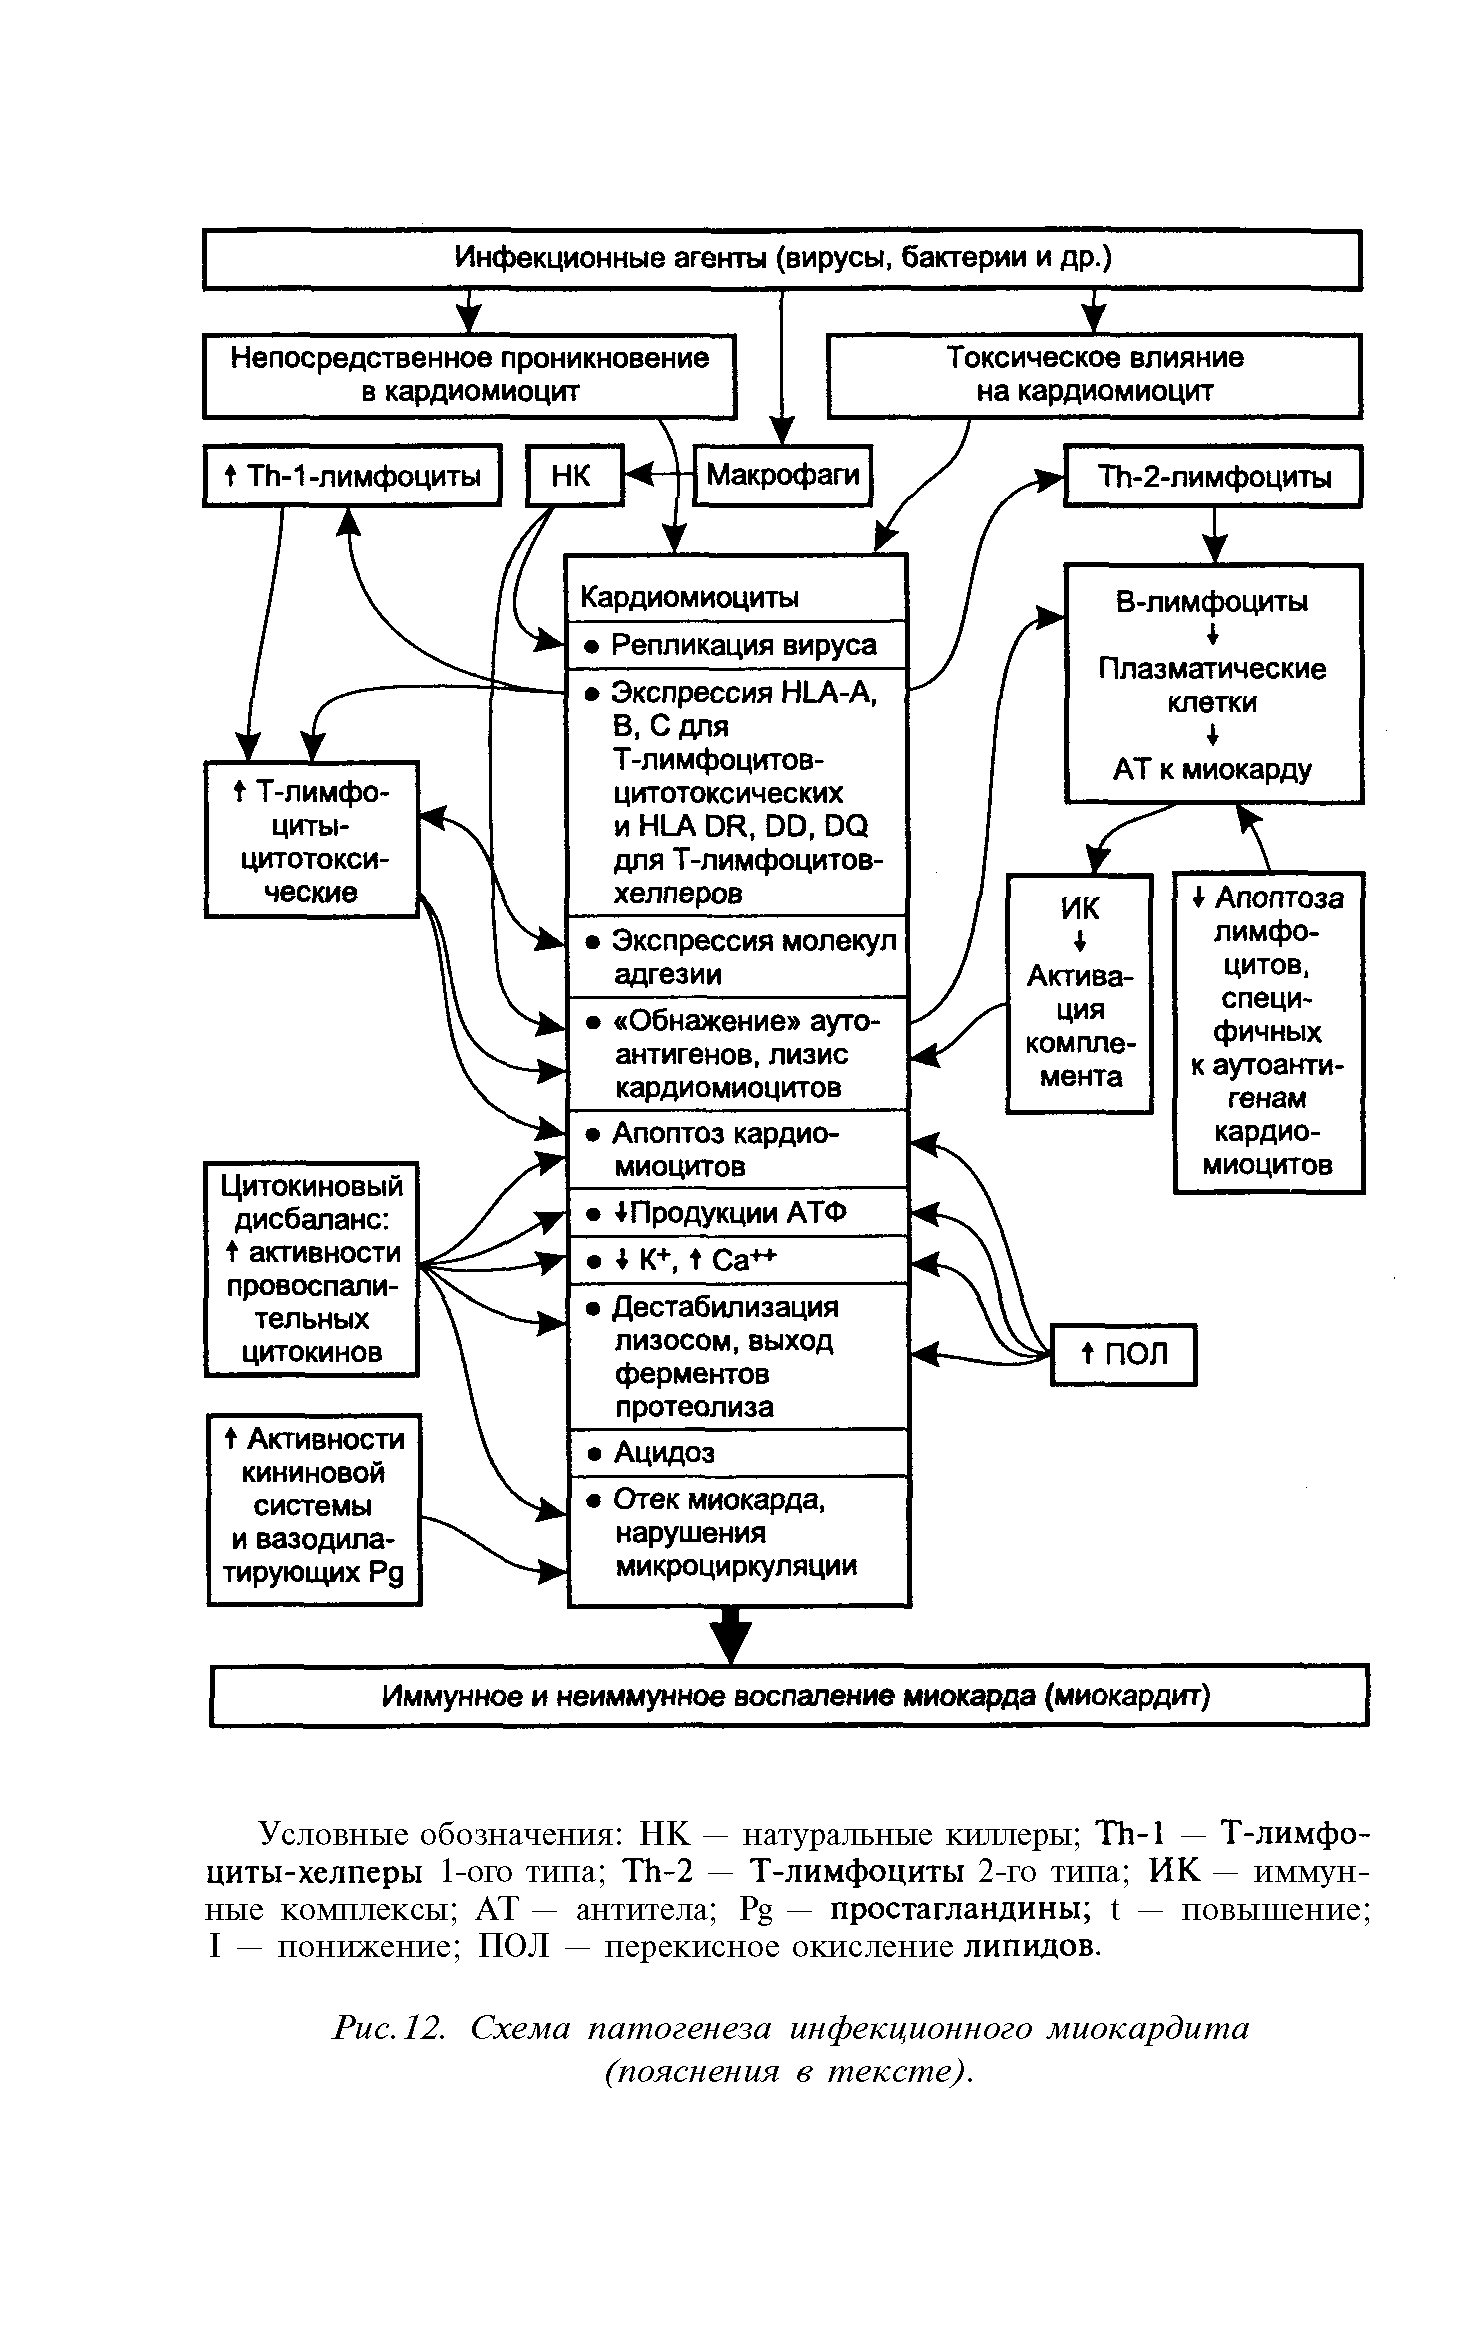 Рис. 12. Схема патогенеза инфекционного миокардита (пояснения в тексте).